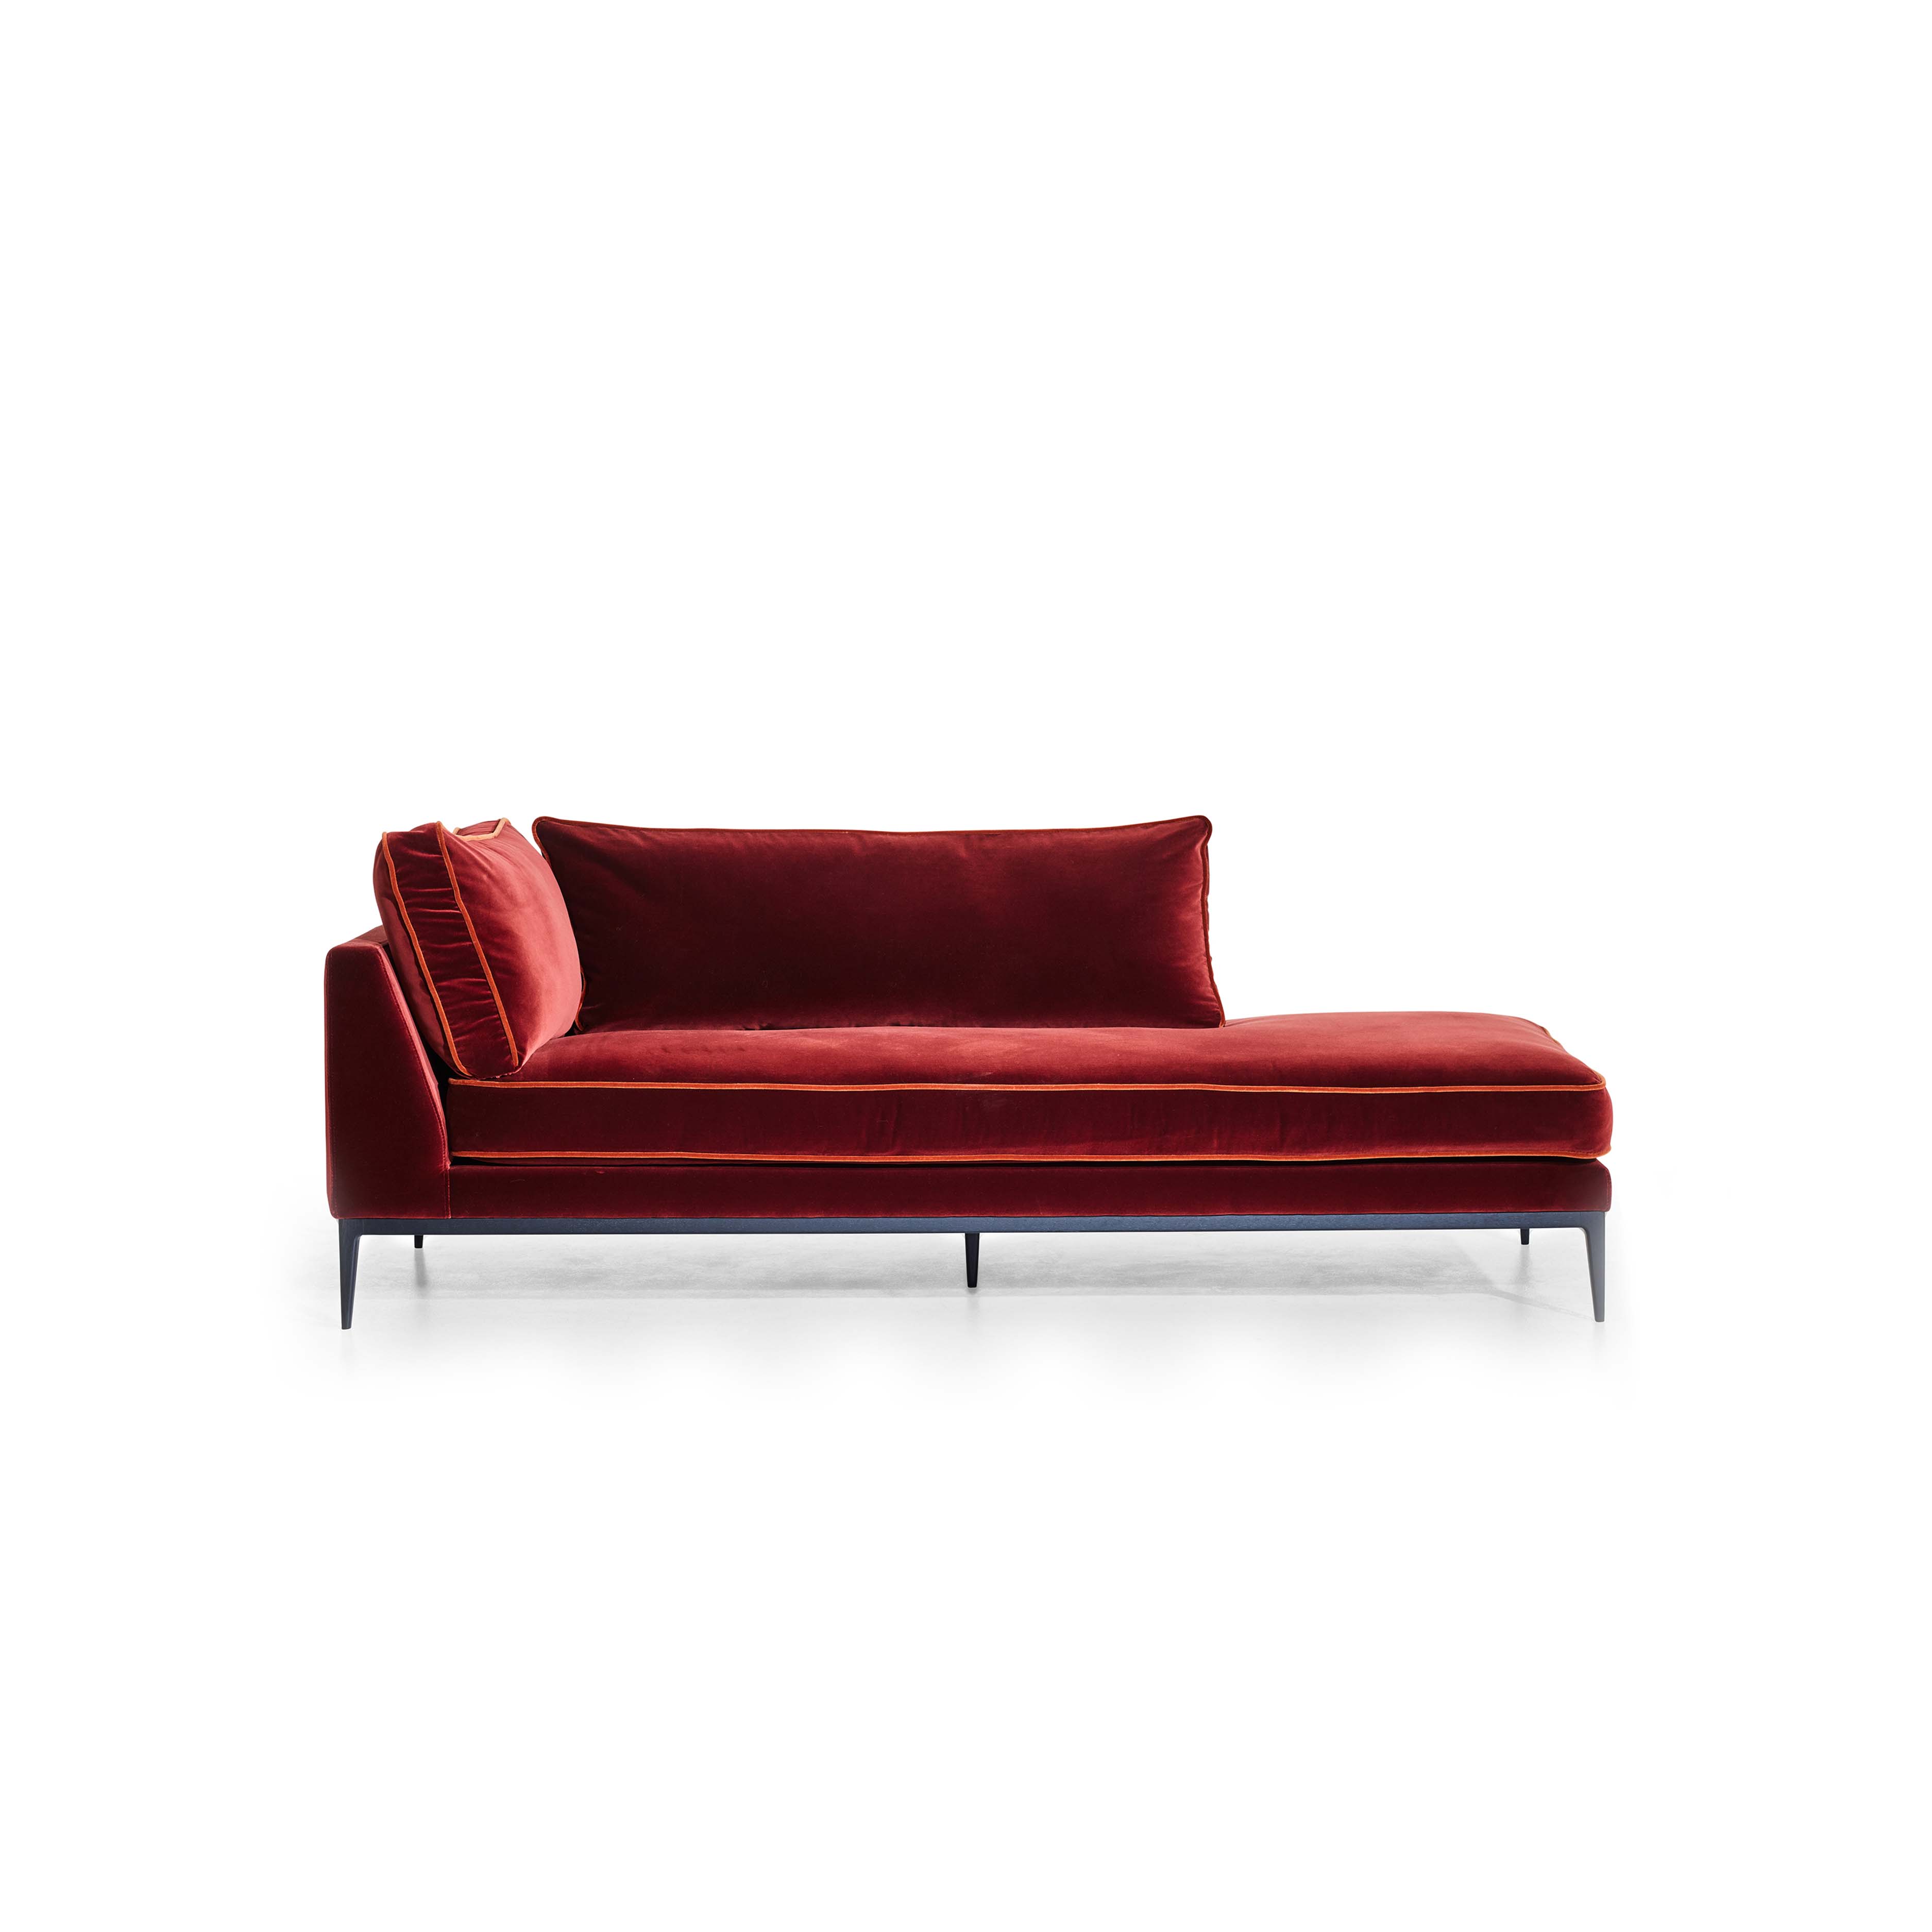 Sabrina Chaise Lounge - Zuster Furniture